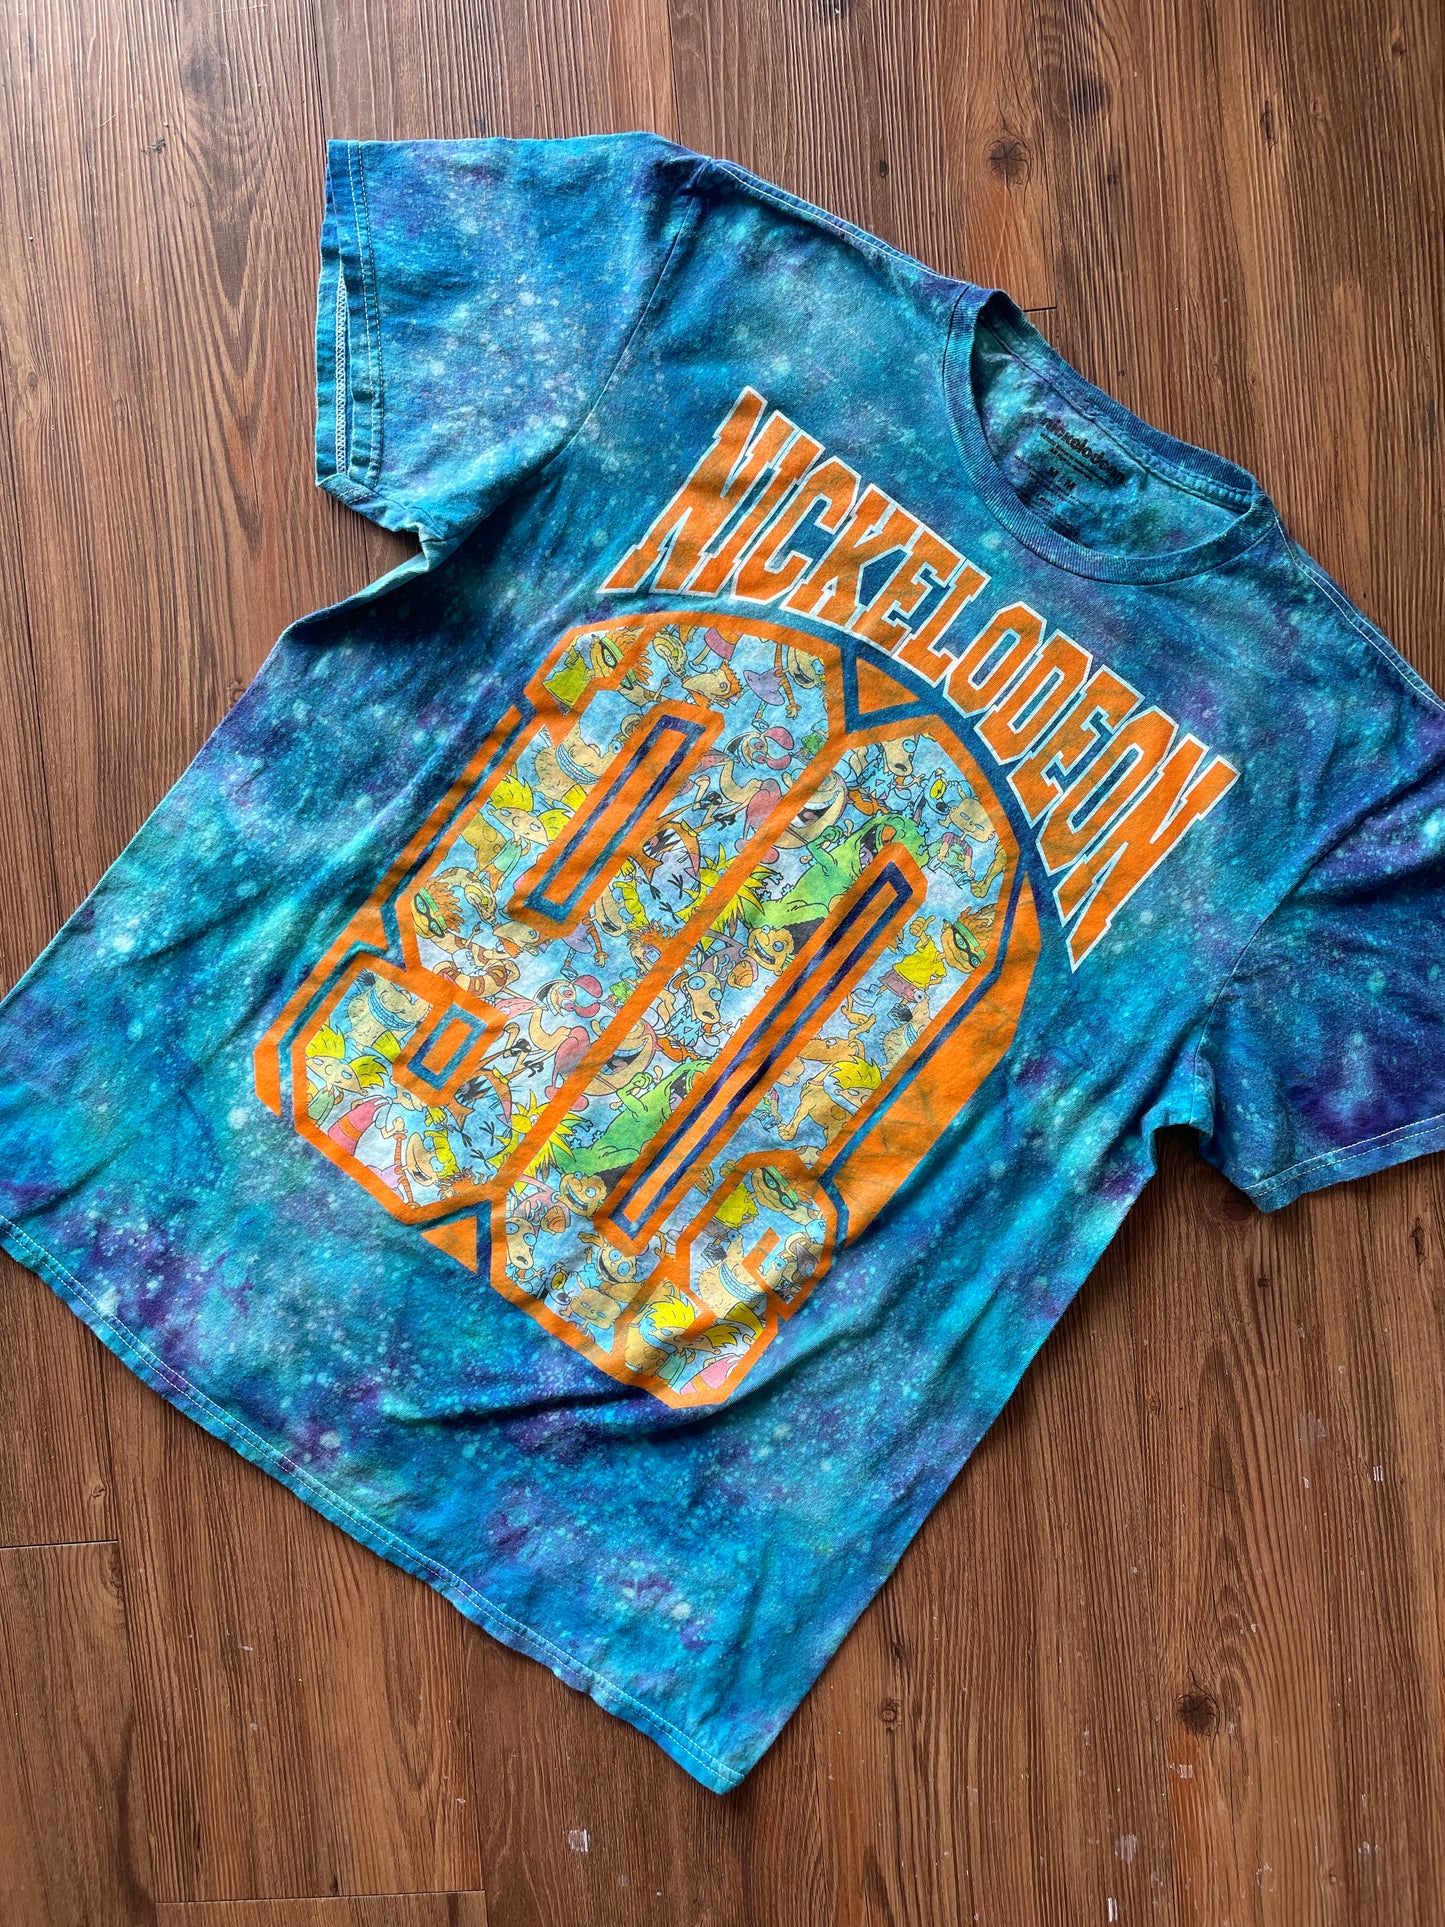 Large Men’s 90s Nickelodeon Handmade Tie Dye T-Shirt | Blue and Orange Galaxy Dye Short Sleeve